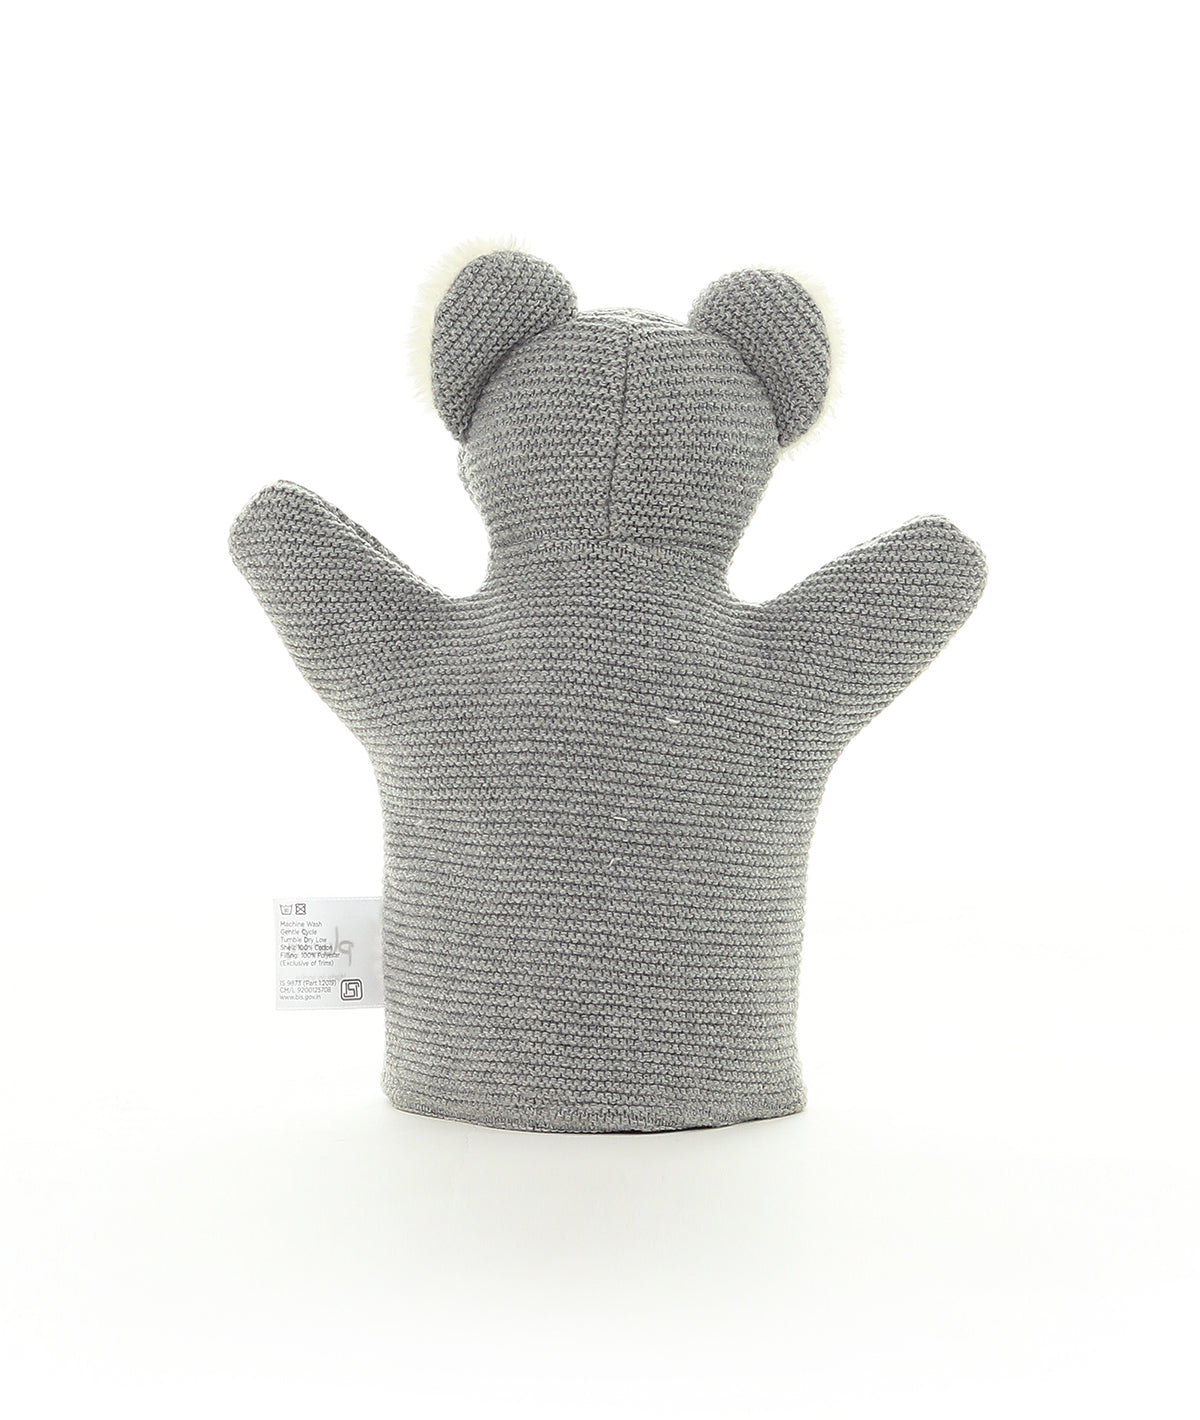 Hand Puppet Cotton Knitted Stuffed Soft Toy (Light Grey Melange)